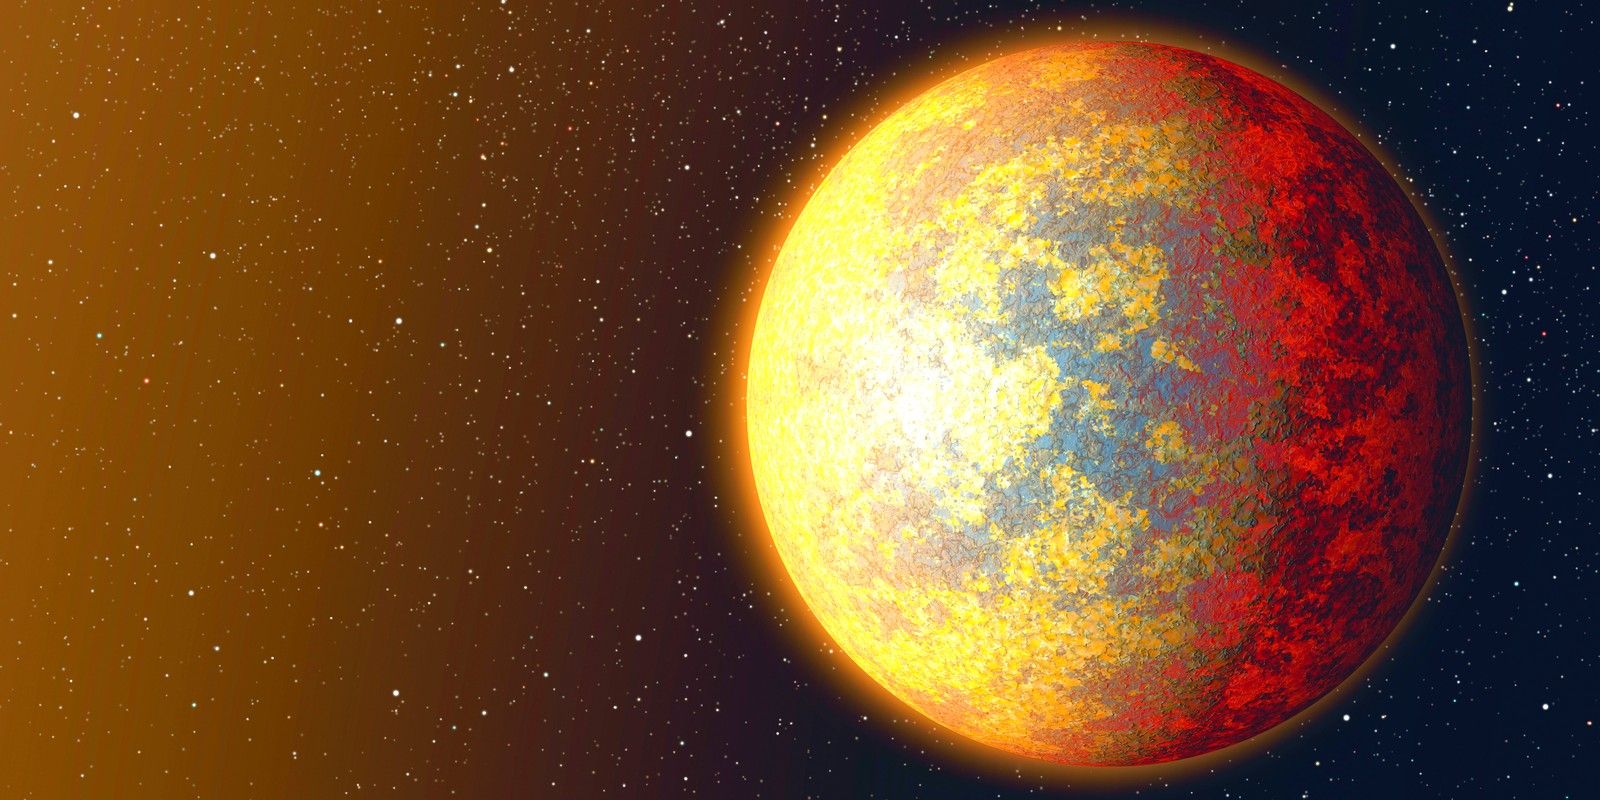 NASA Spitzer finds rocky exoplanet